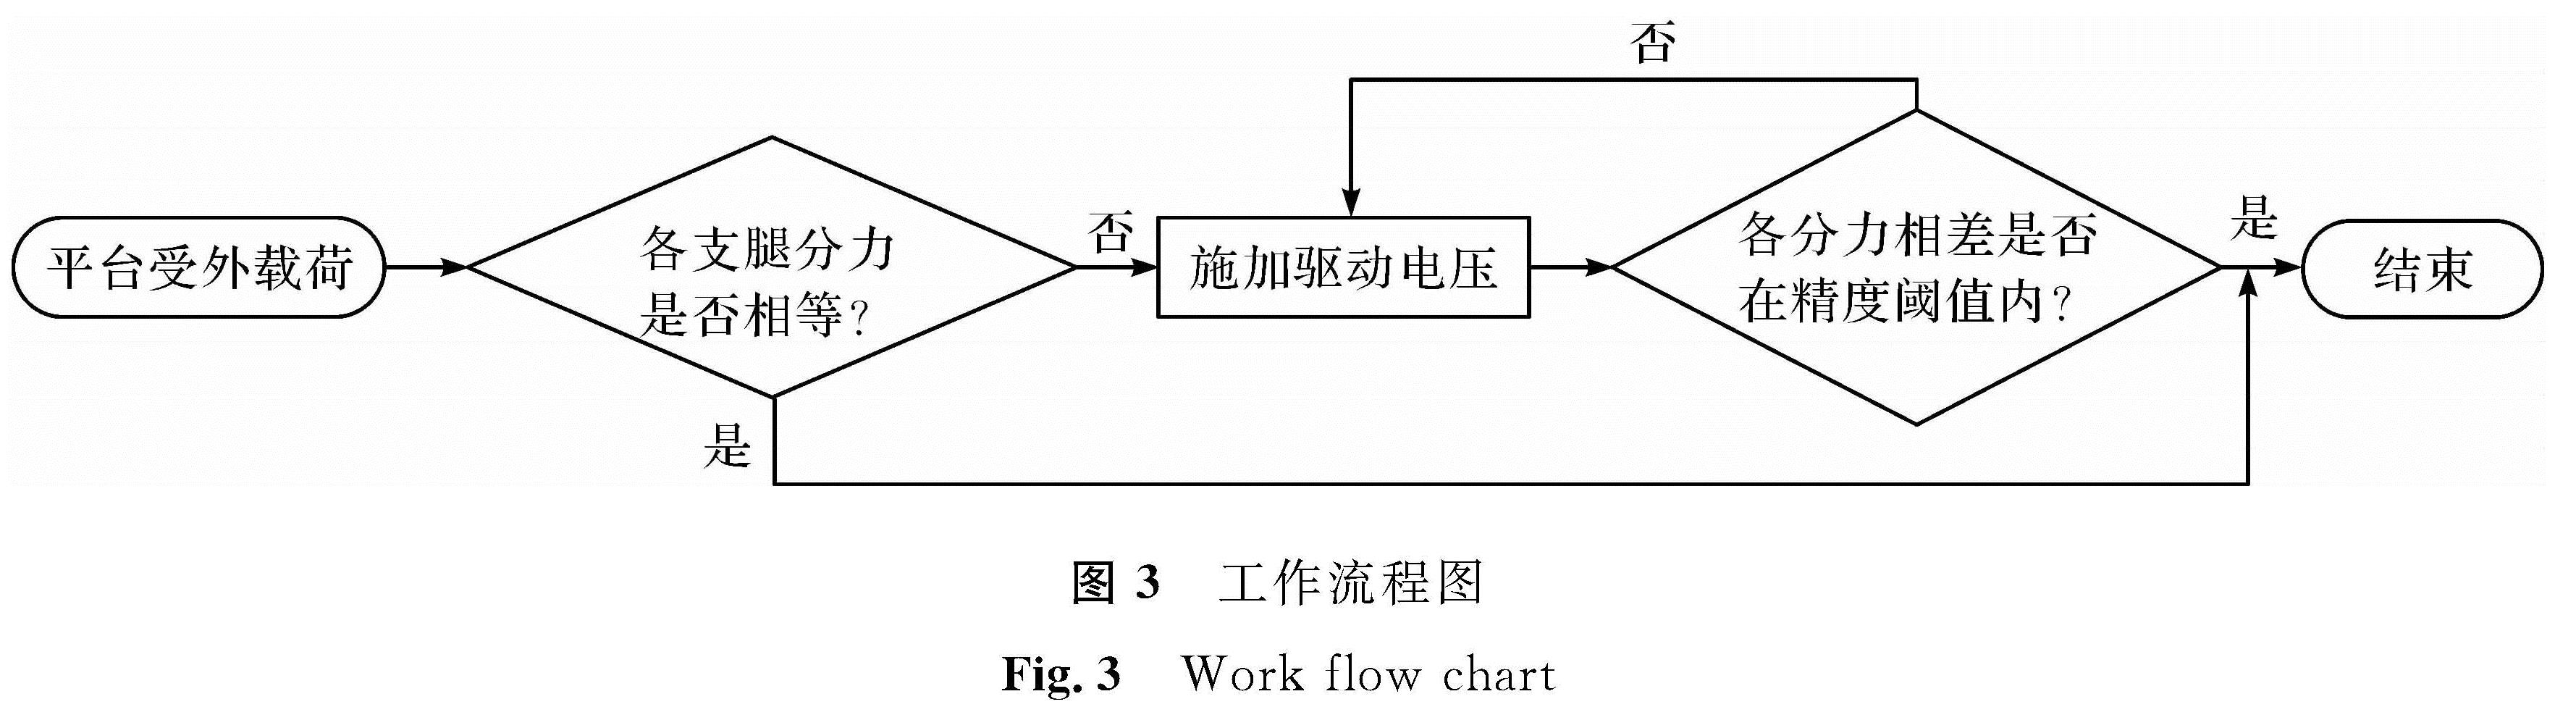 图3 工作流程图<br/>Fig.3 Work flow chart